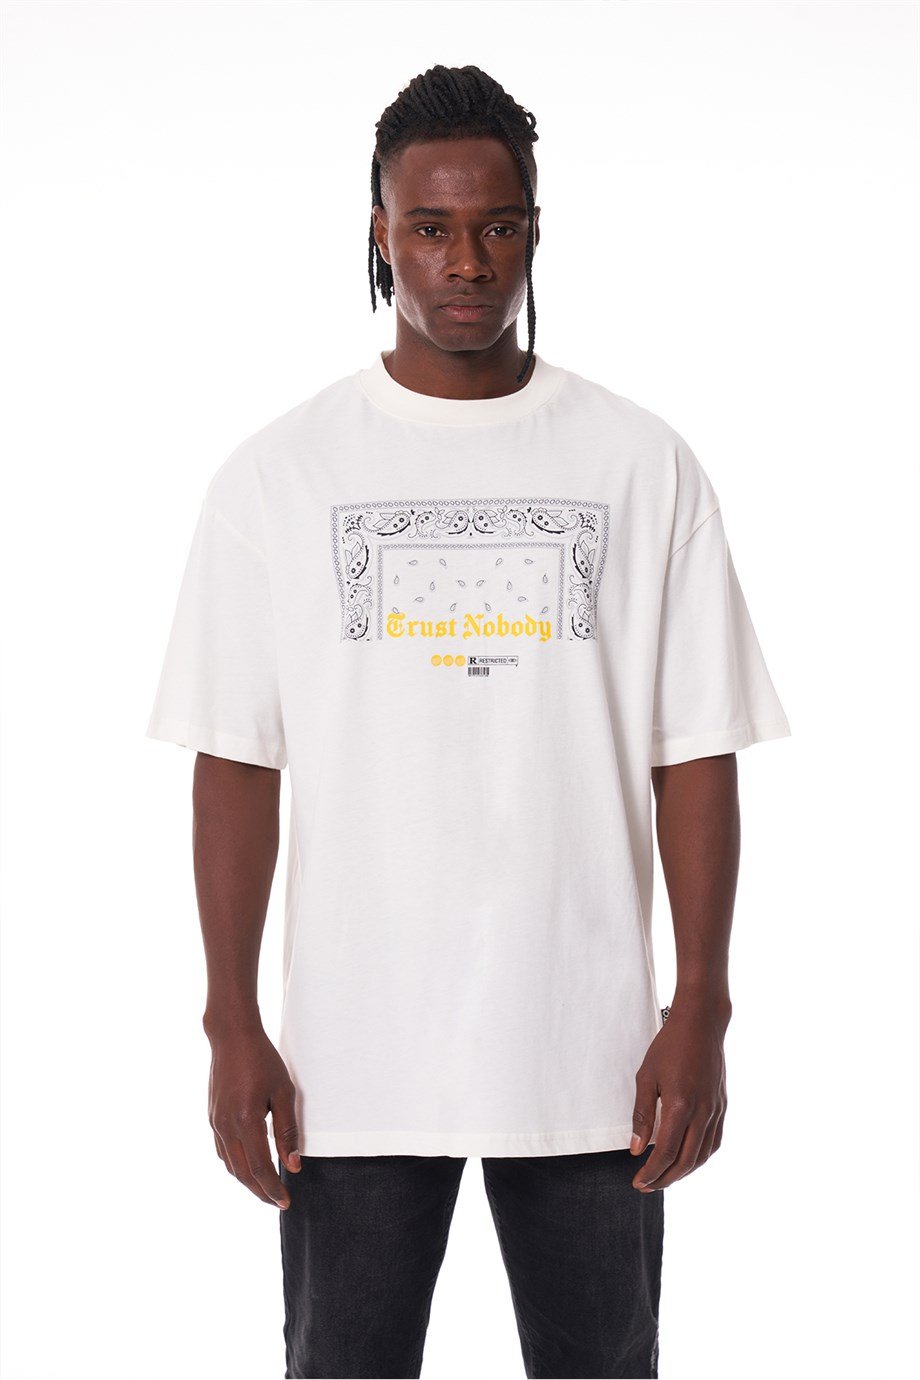 Trust Nobody White T-shirt - Ghetto off Limits